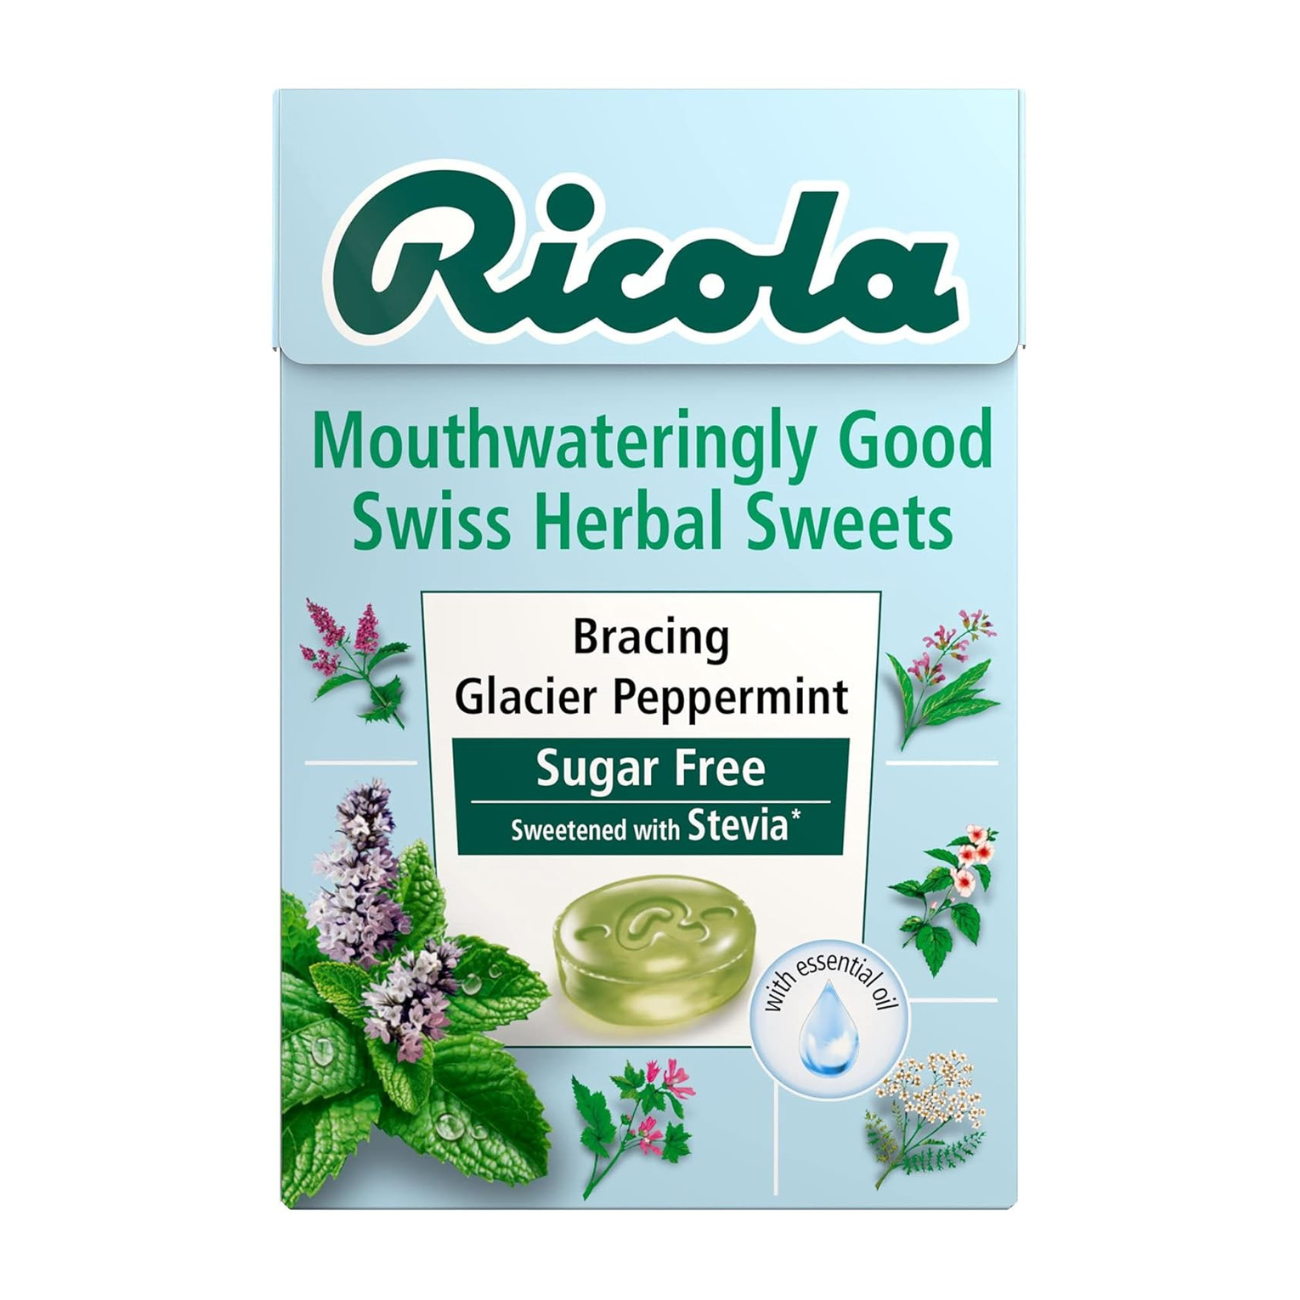 Glacier Peppermint Sugar Free Swiss Herbal Sweets 45g